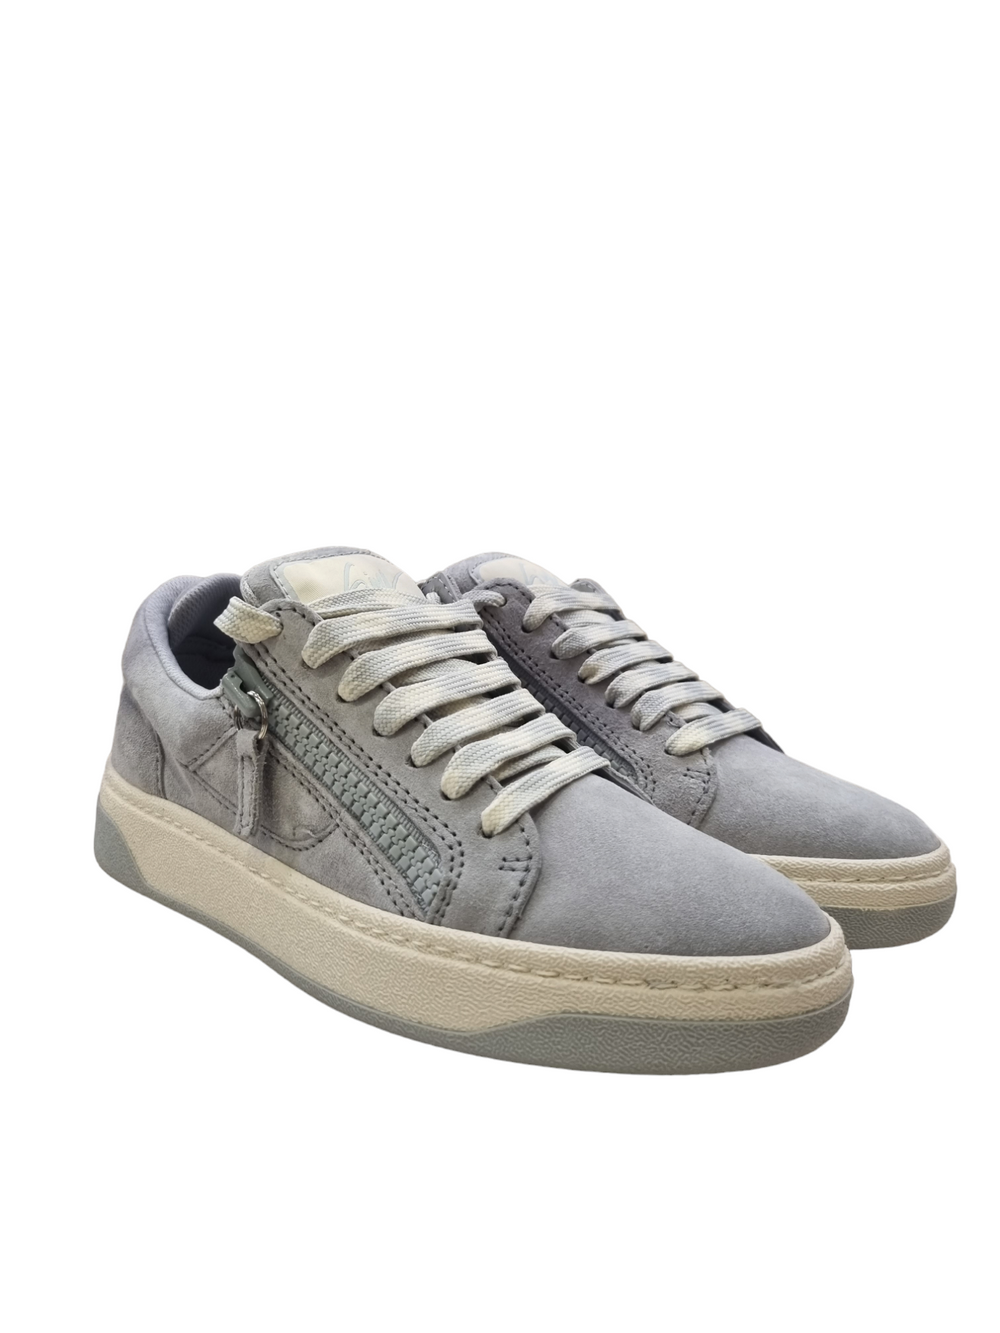 Gz94 Powder Blue Suede Sneakers - GIUSEPPE-ZANOTTI - Liberty Shoes Australia